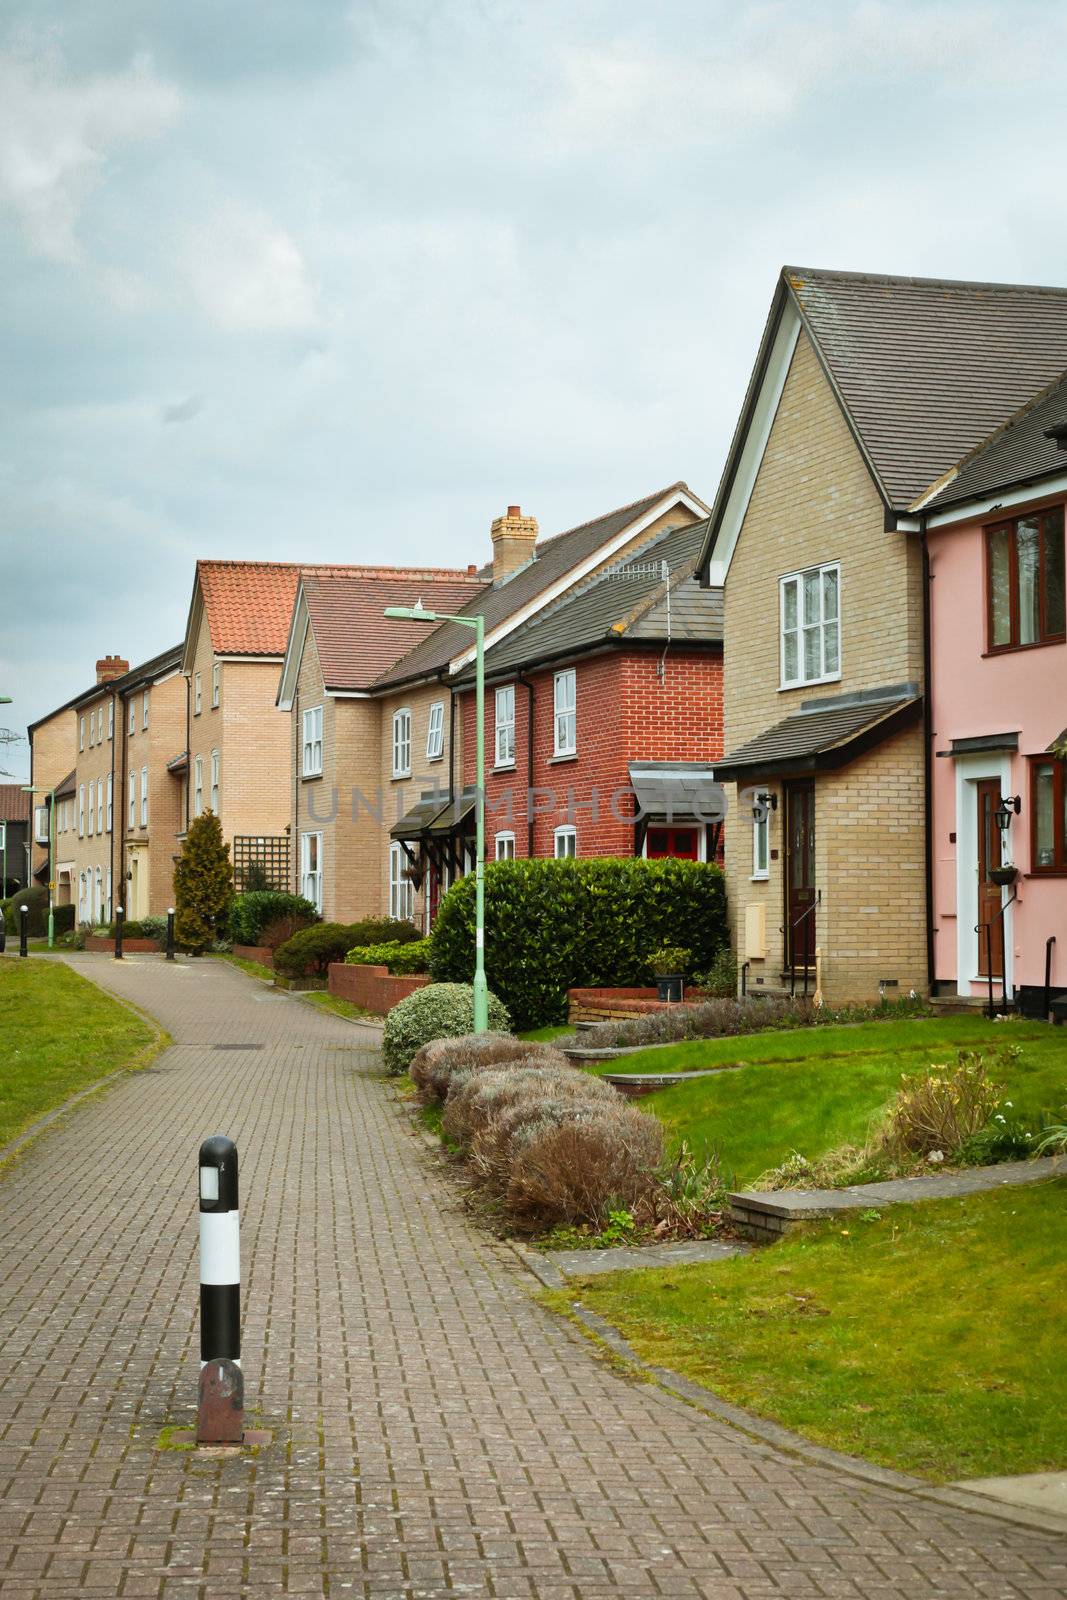 A m odern housing development in Bury St Edmunds, England